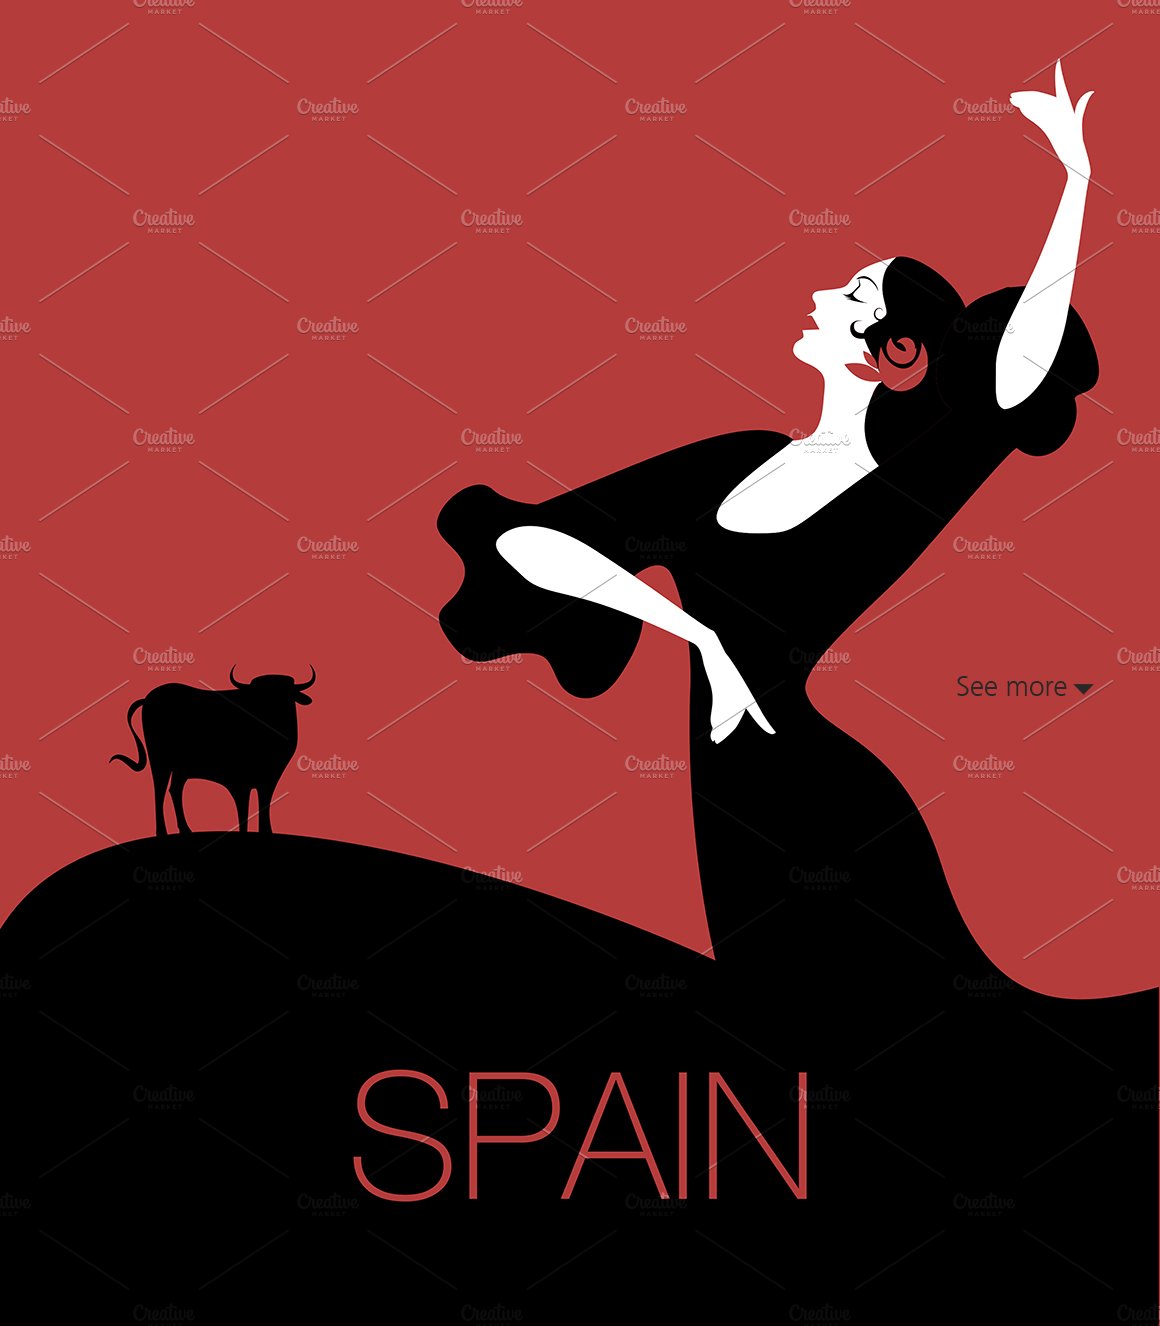 Spanish flamenco dancer and bull cover image.